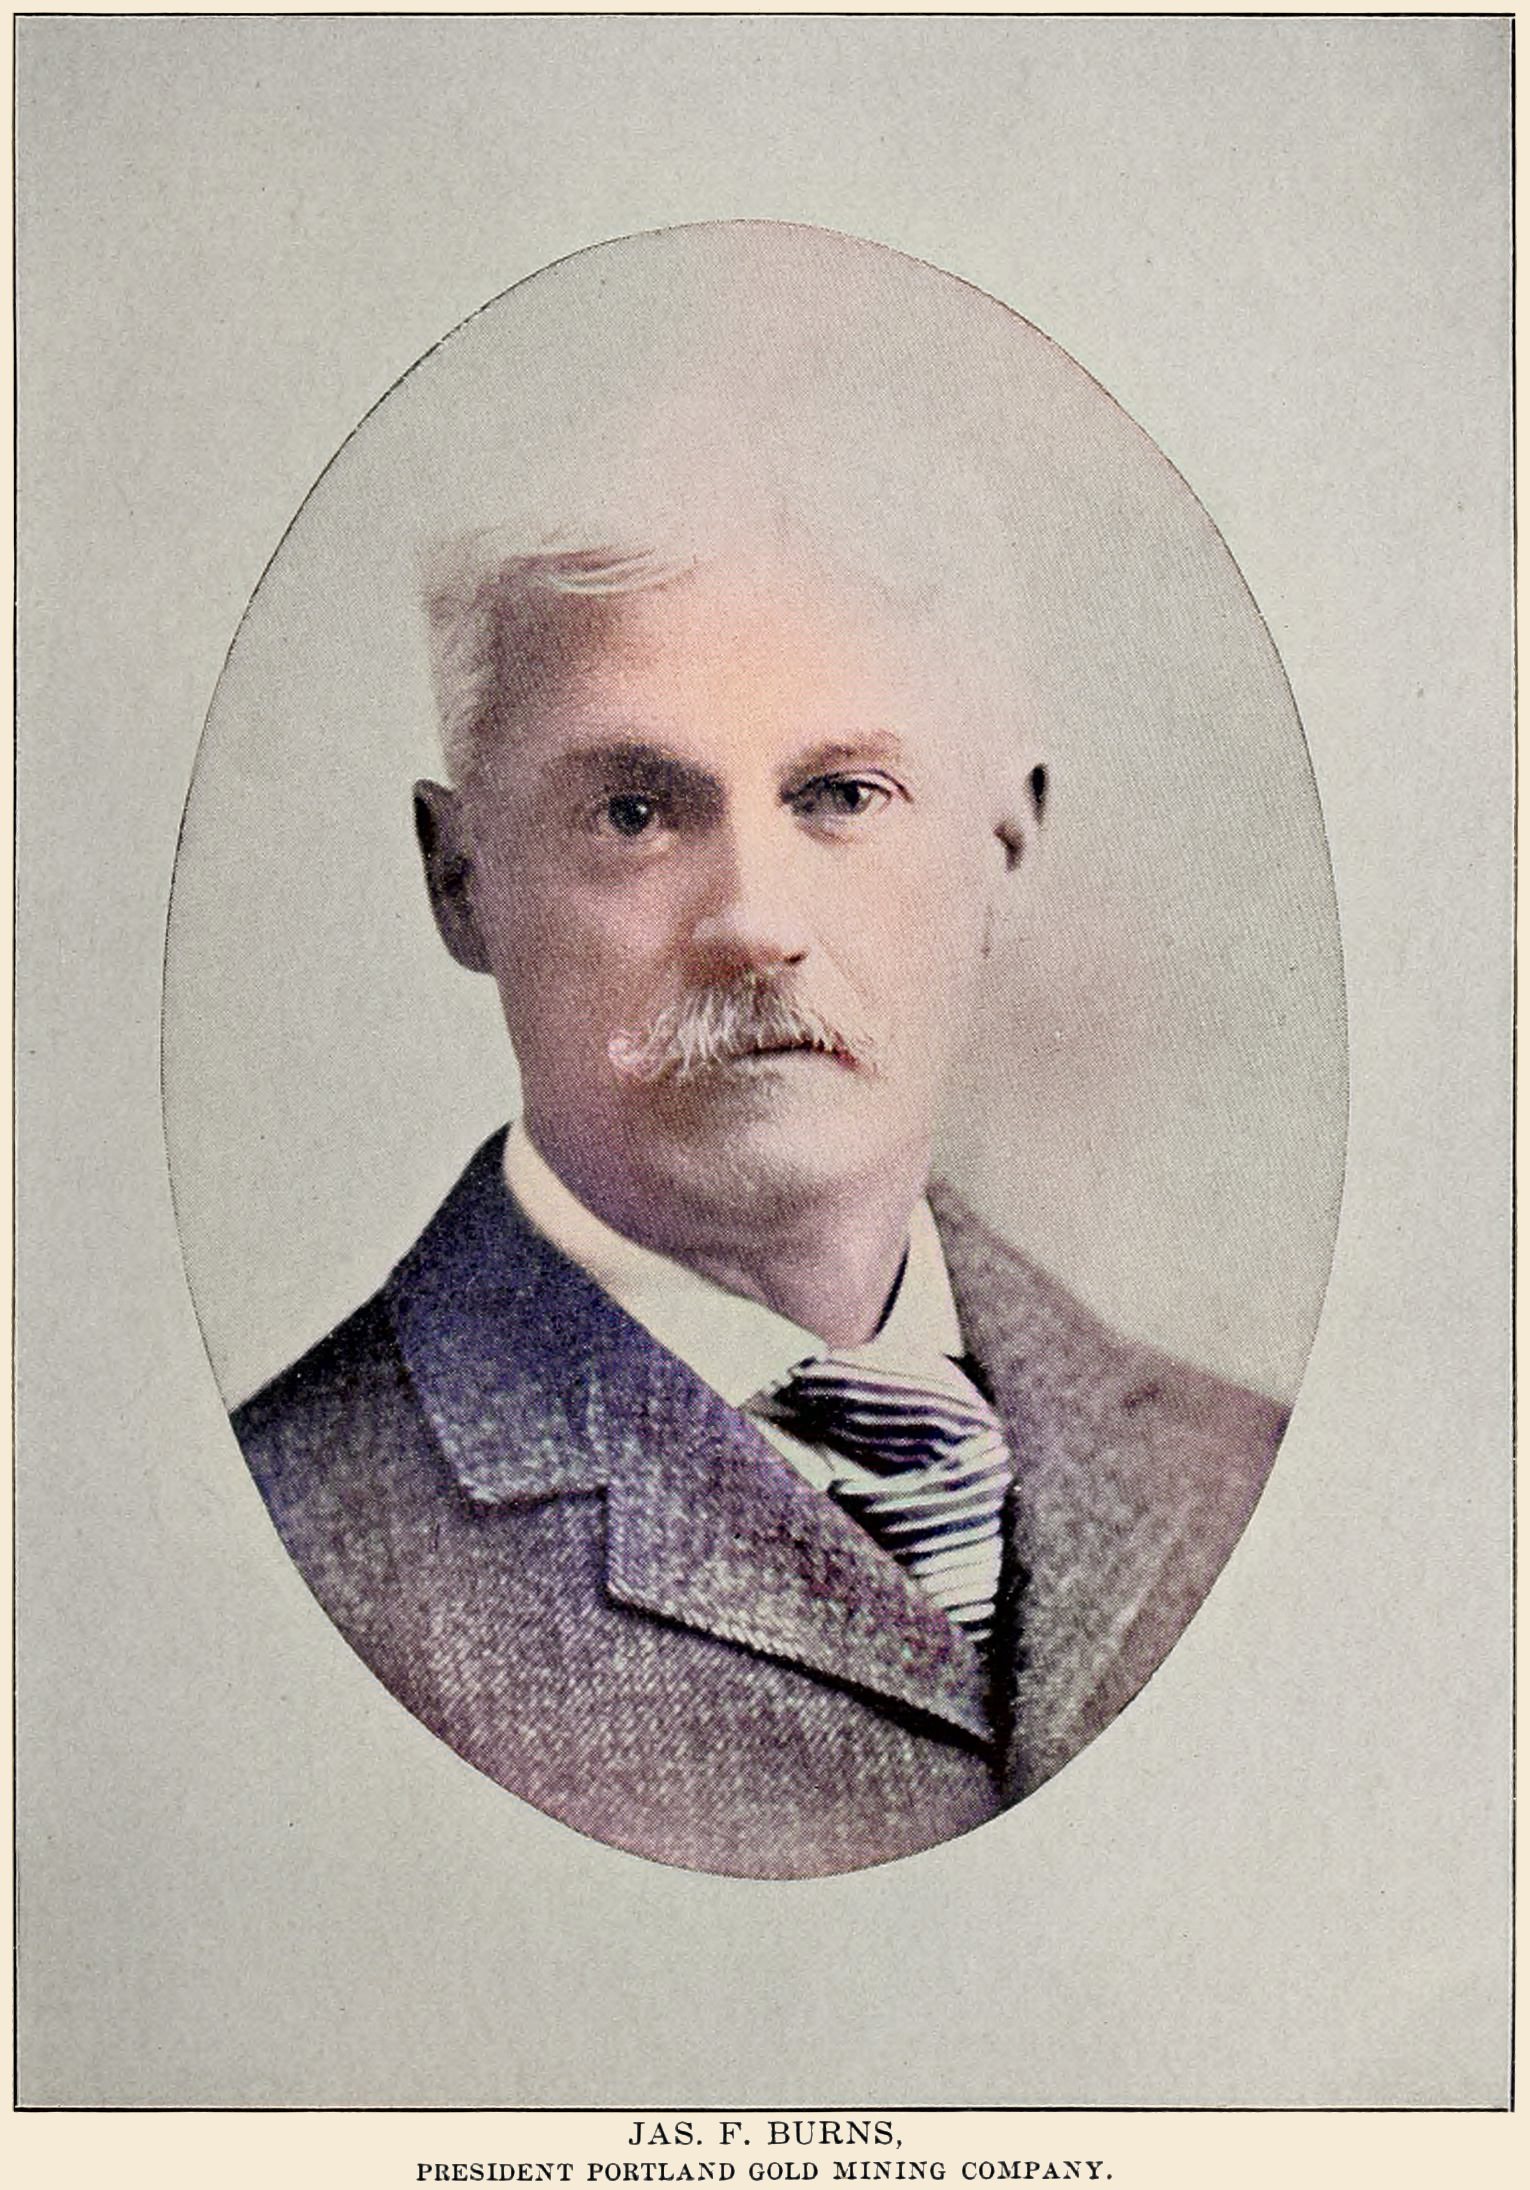 Jas. F. Burns, President Portland Gold Mining Company.